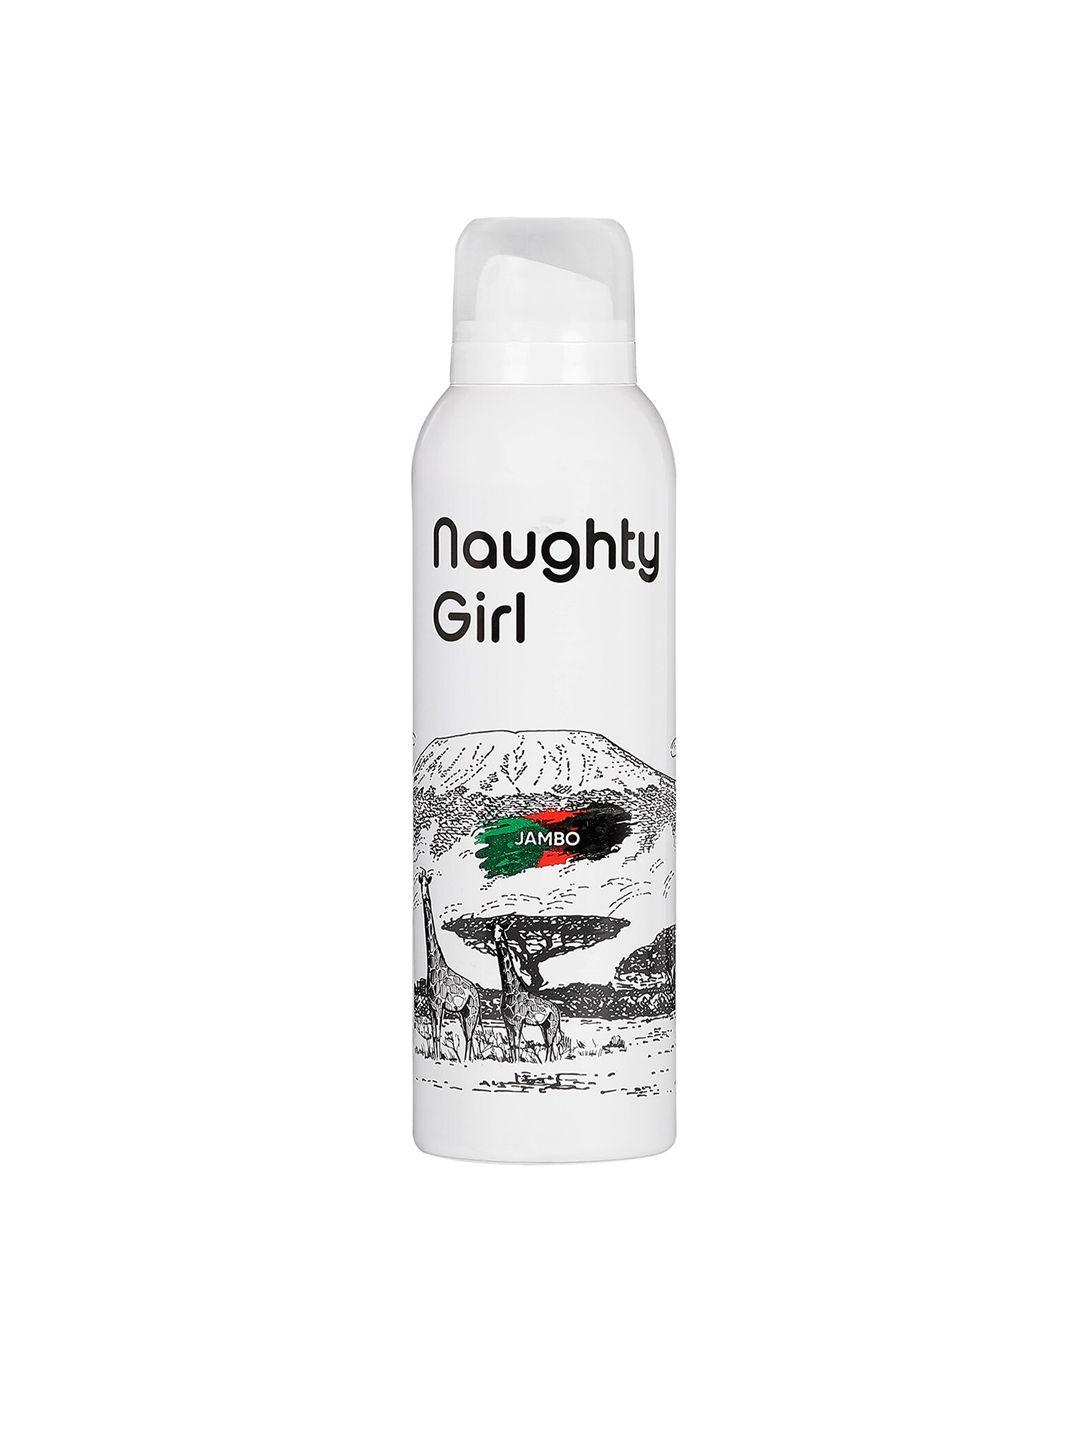 lyla-blanc-naughty-girl-jambo-deodorant-200ml